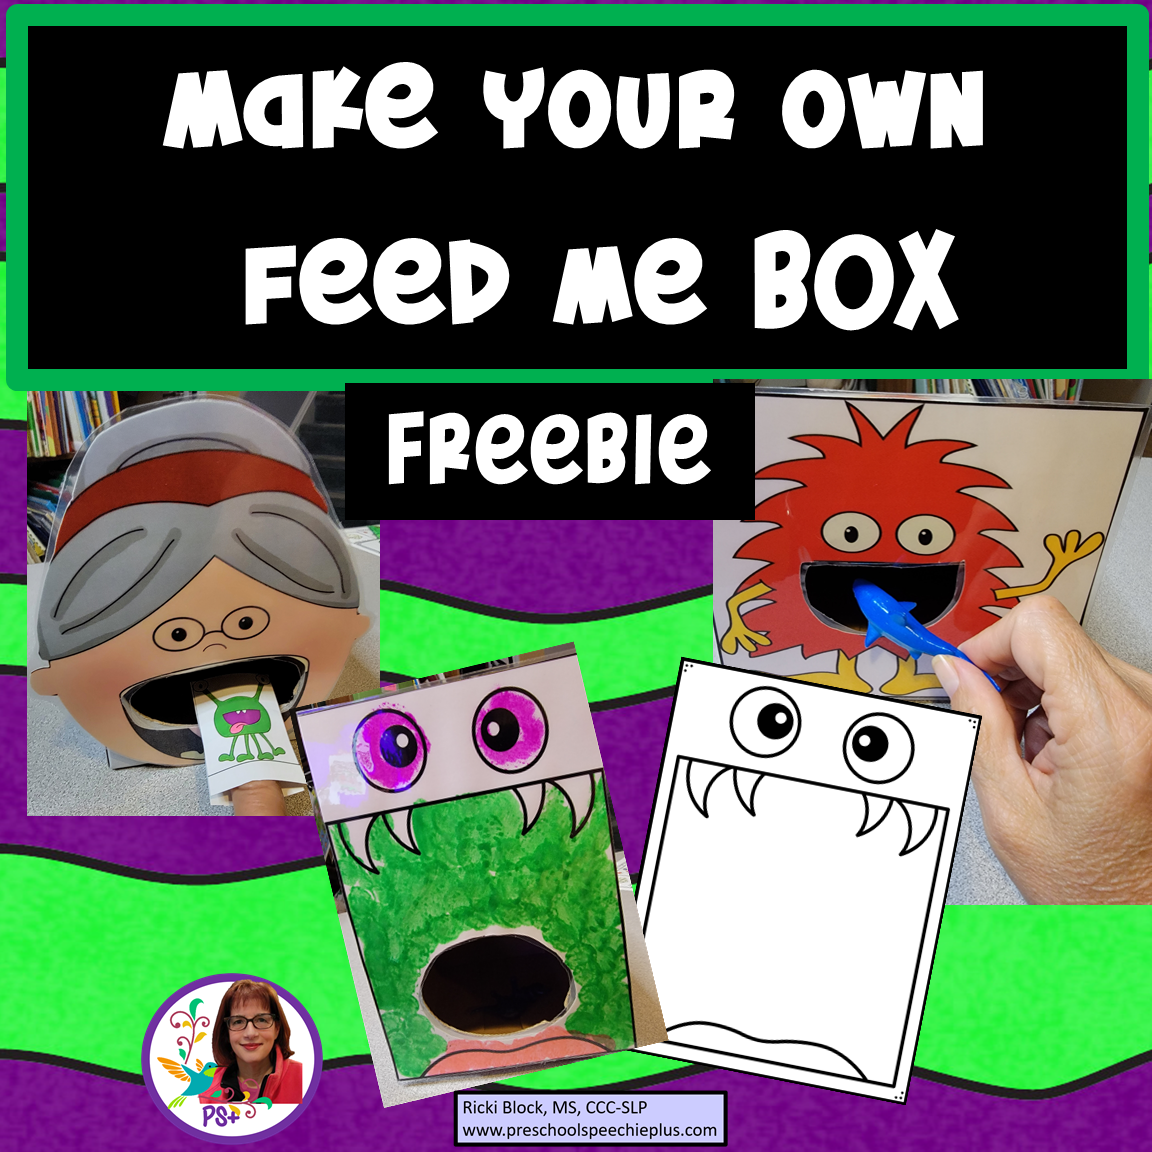 Feed me box.png (Copy)